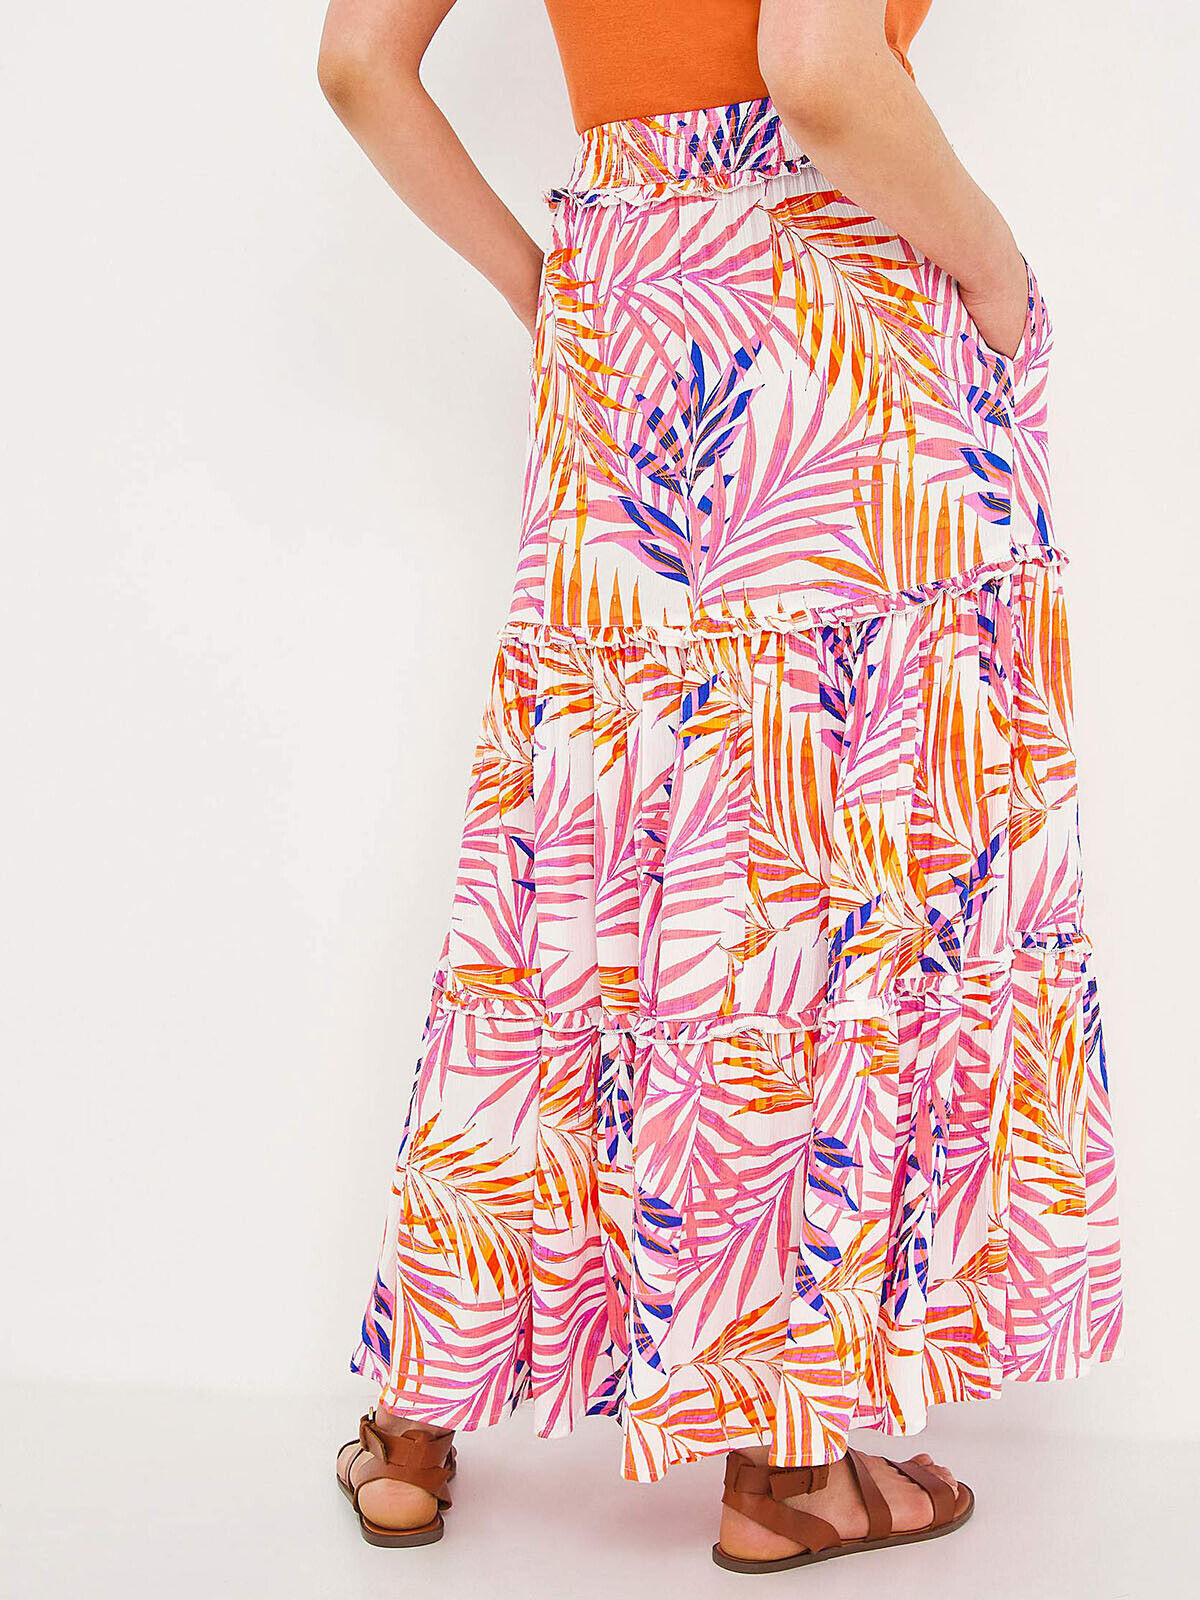 Julipa Pink Crinkle Palm Tree Skirt Sizes 16, 18, 20, 22, 28, 30 RRP £36